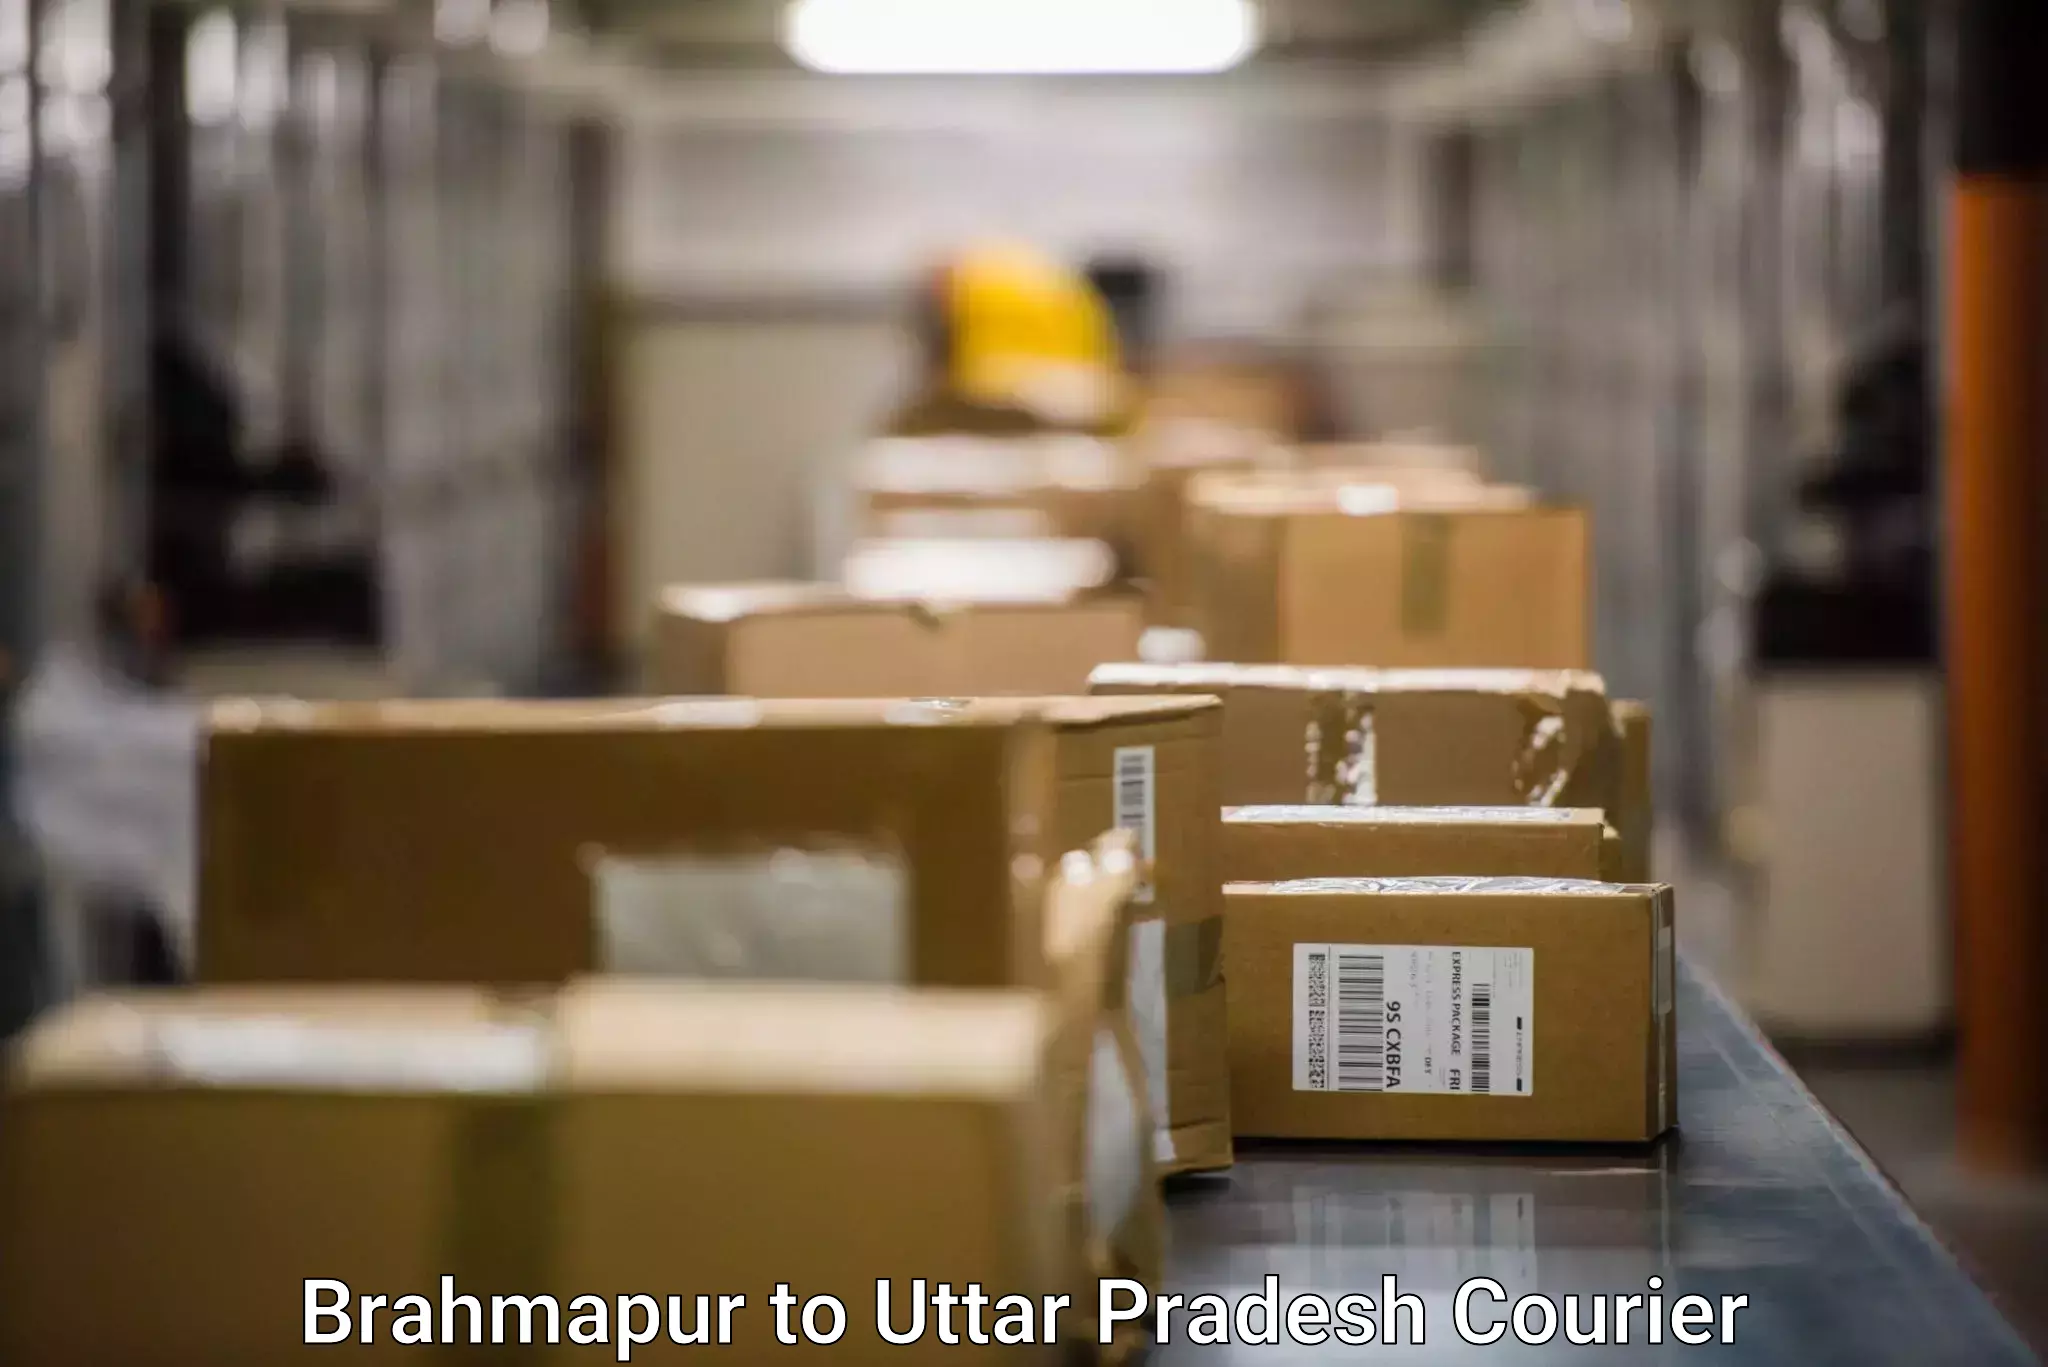 Courier app Brahmapur to Kanpur